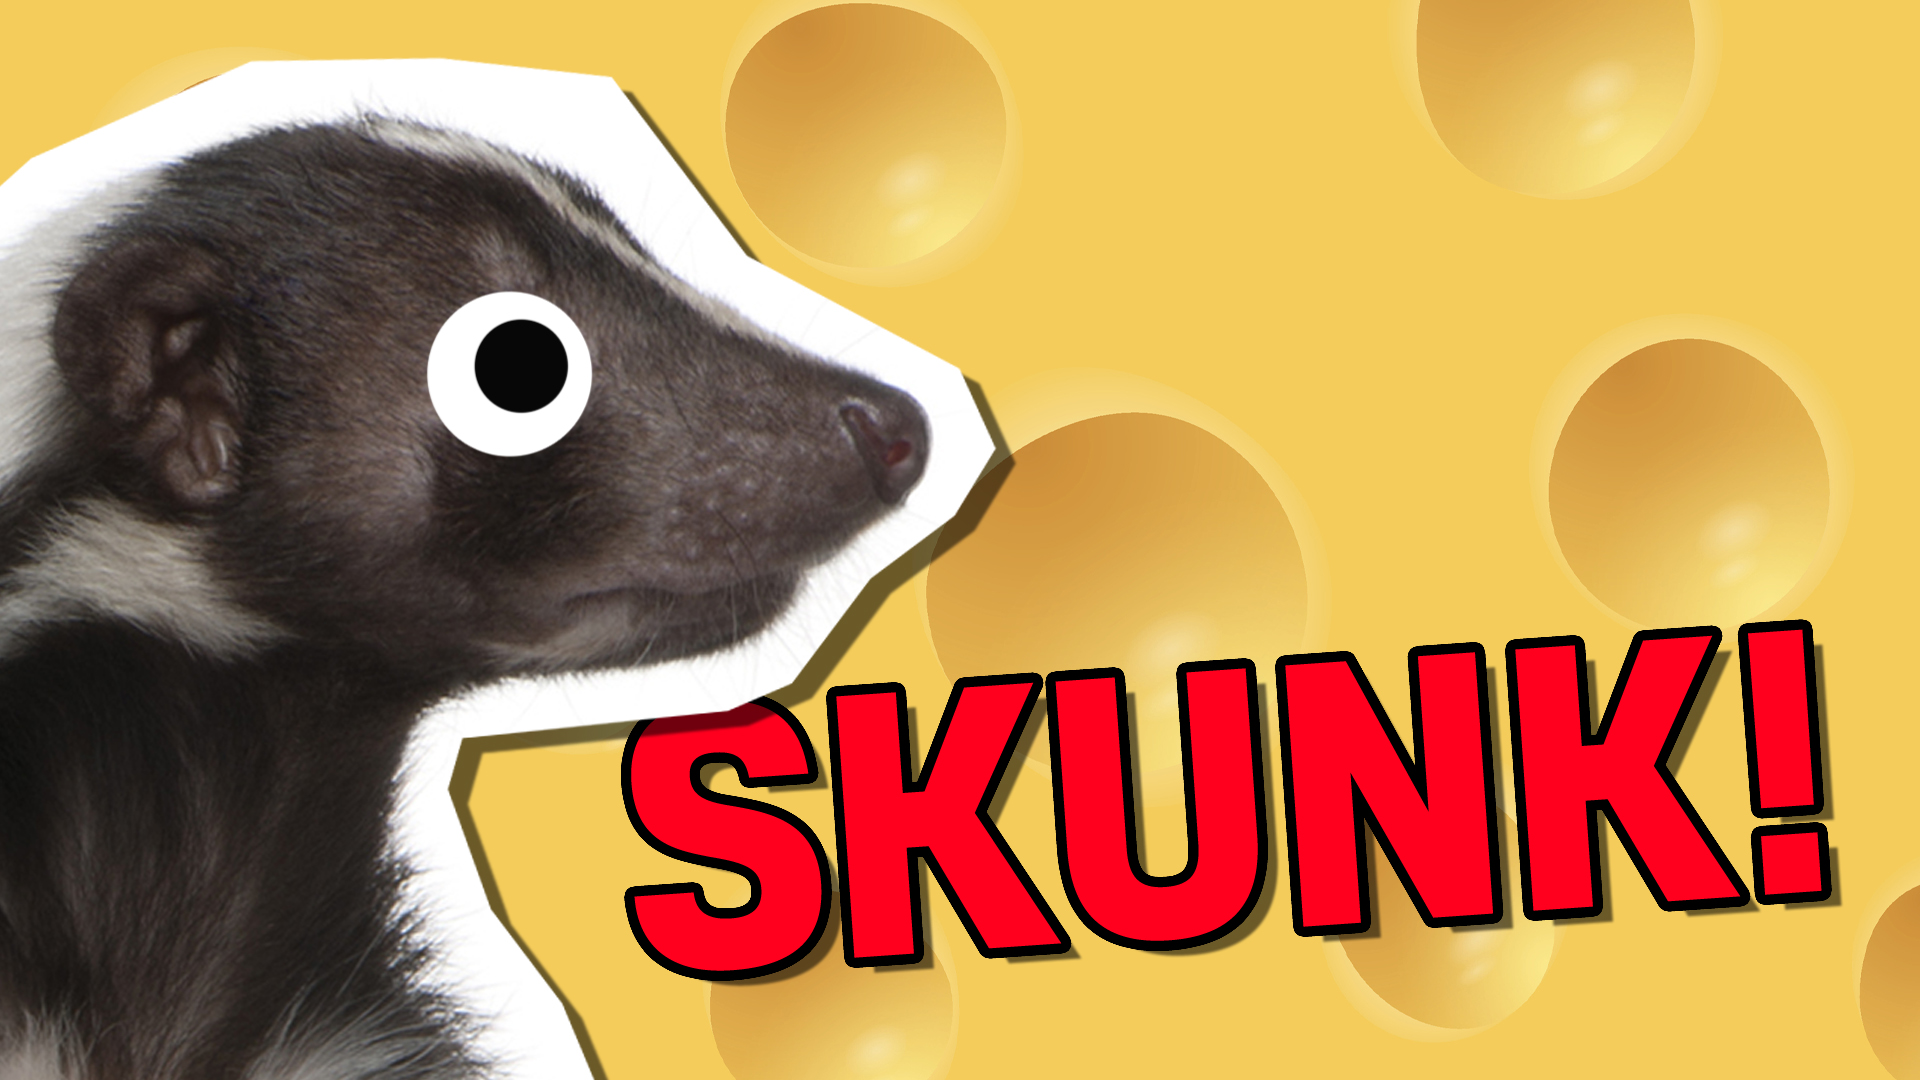 Skunk | Smelly Animal